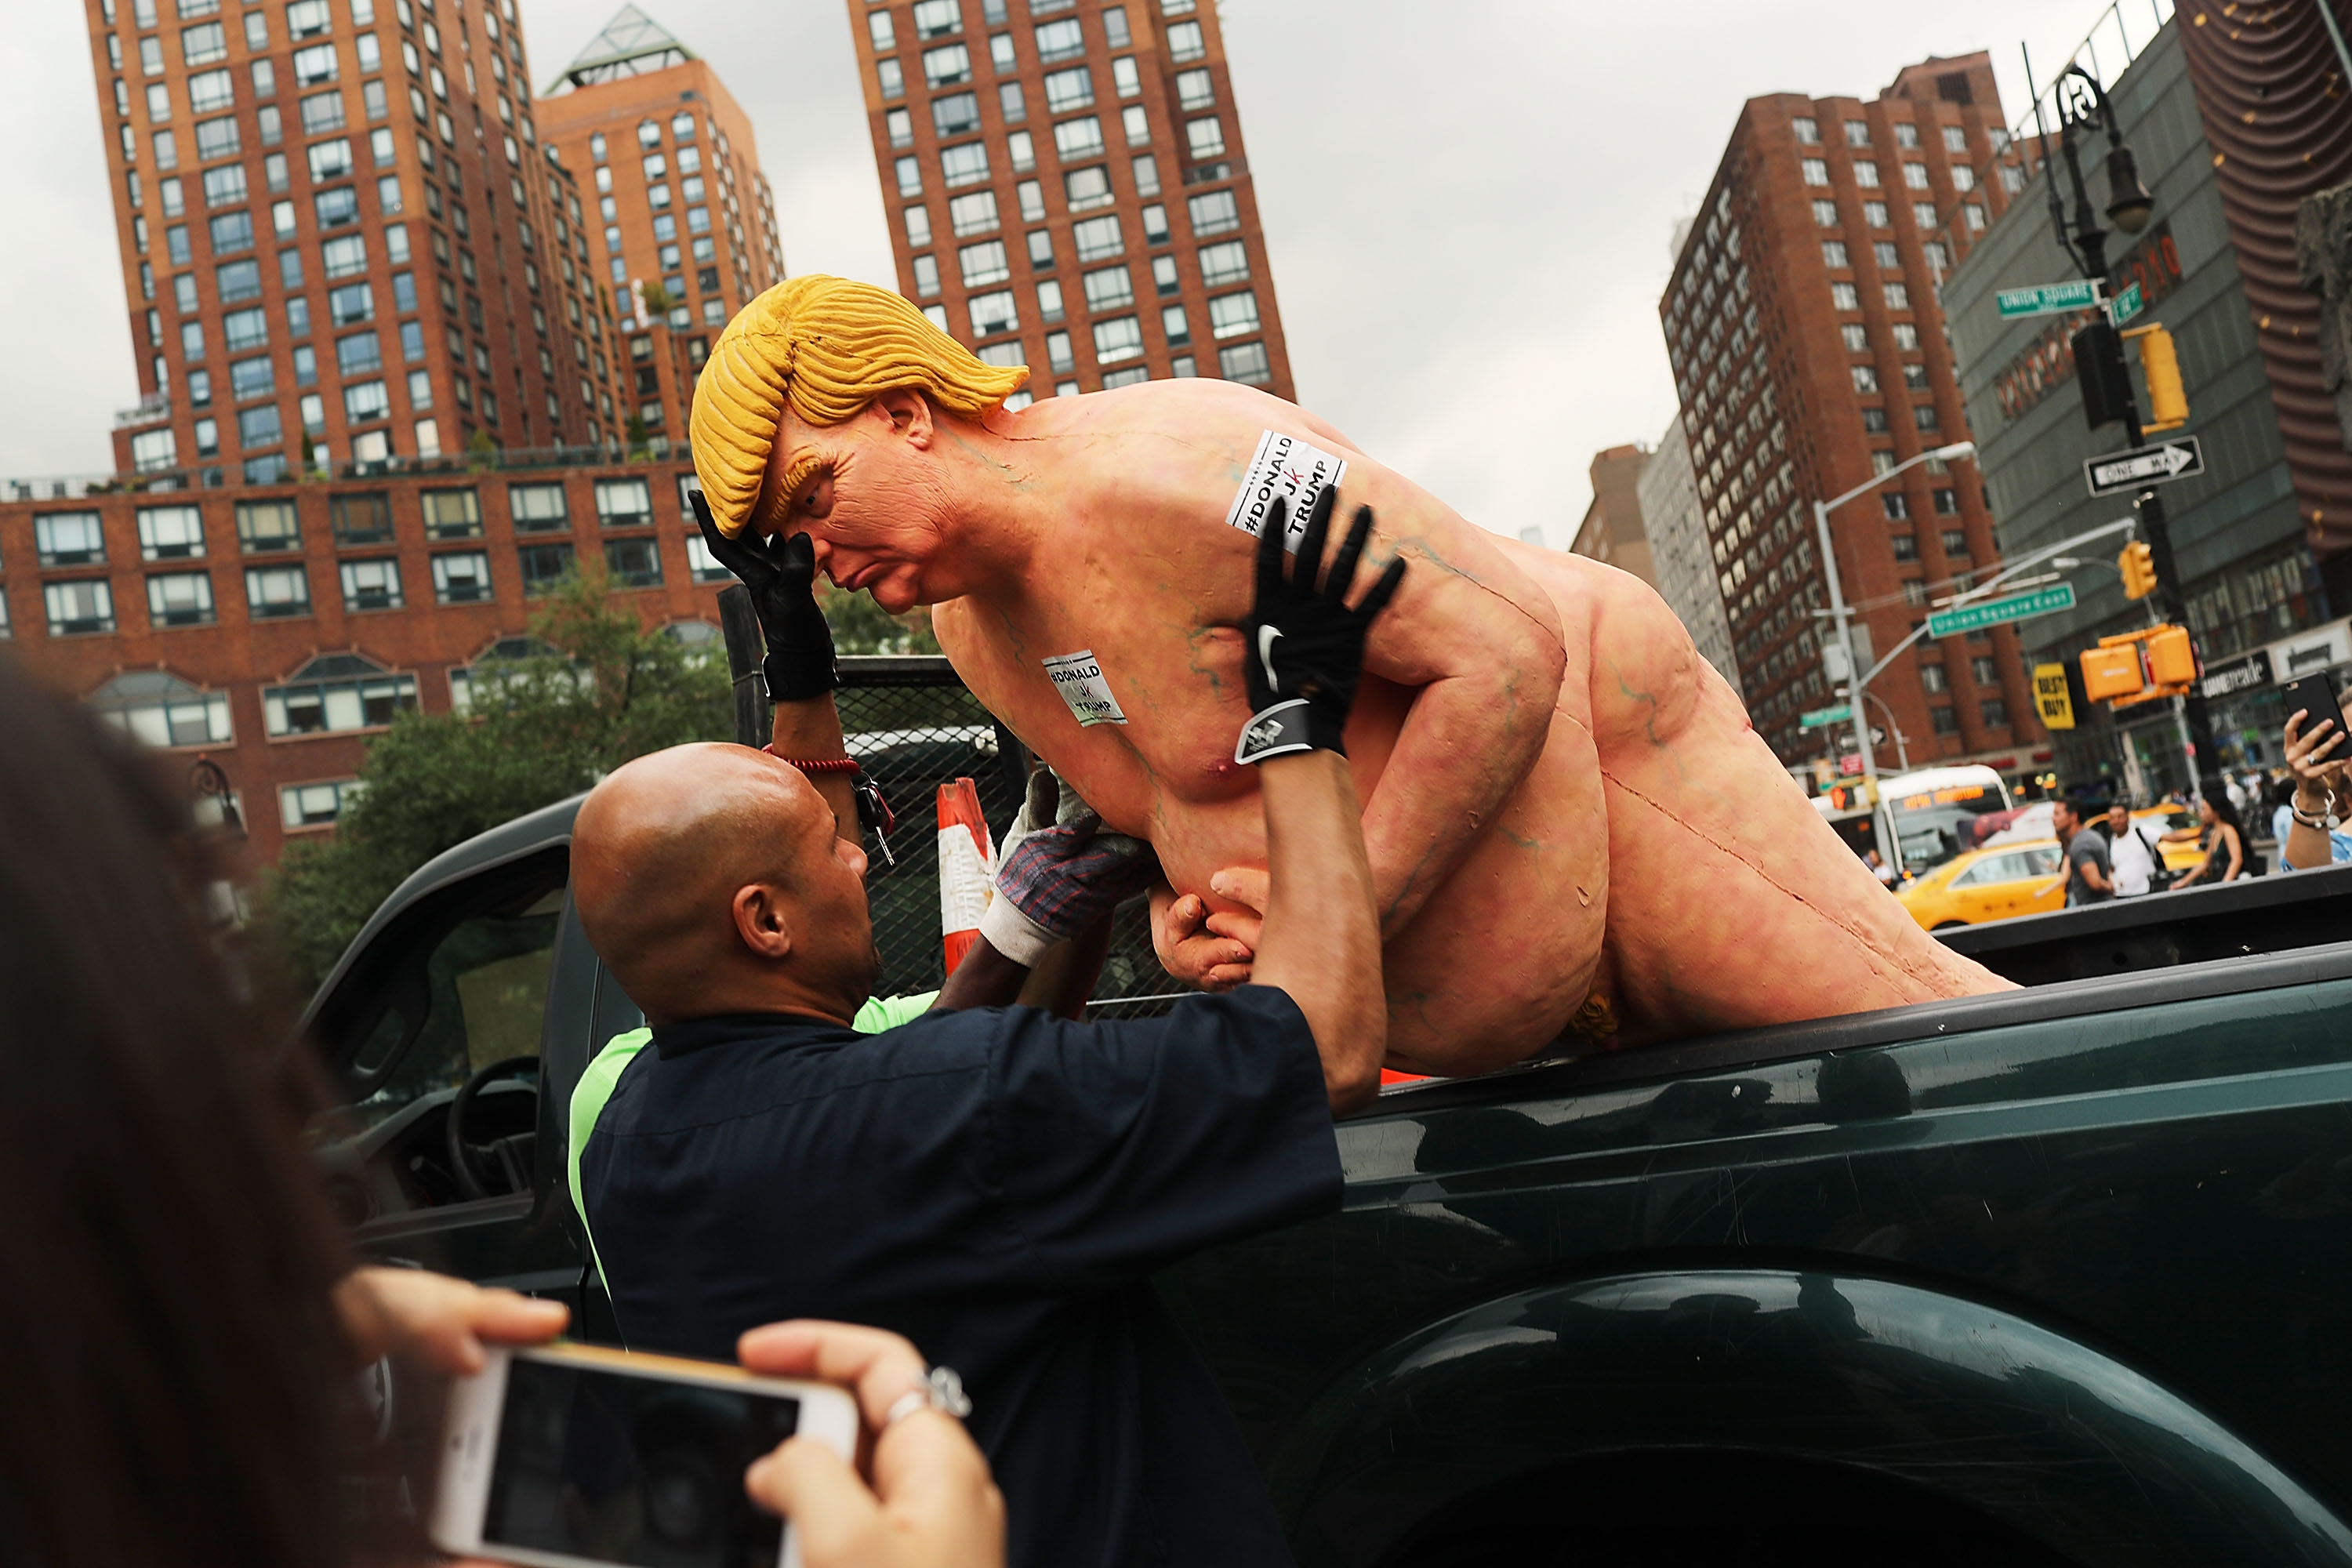 Naked Trump Statues Pop Up Around U.S. - CBS New York